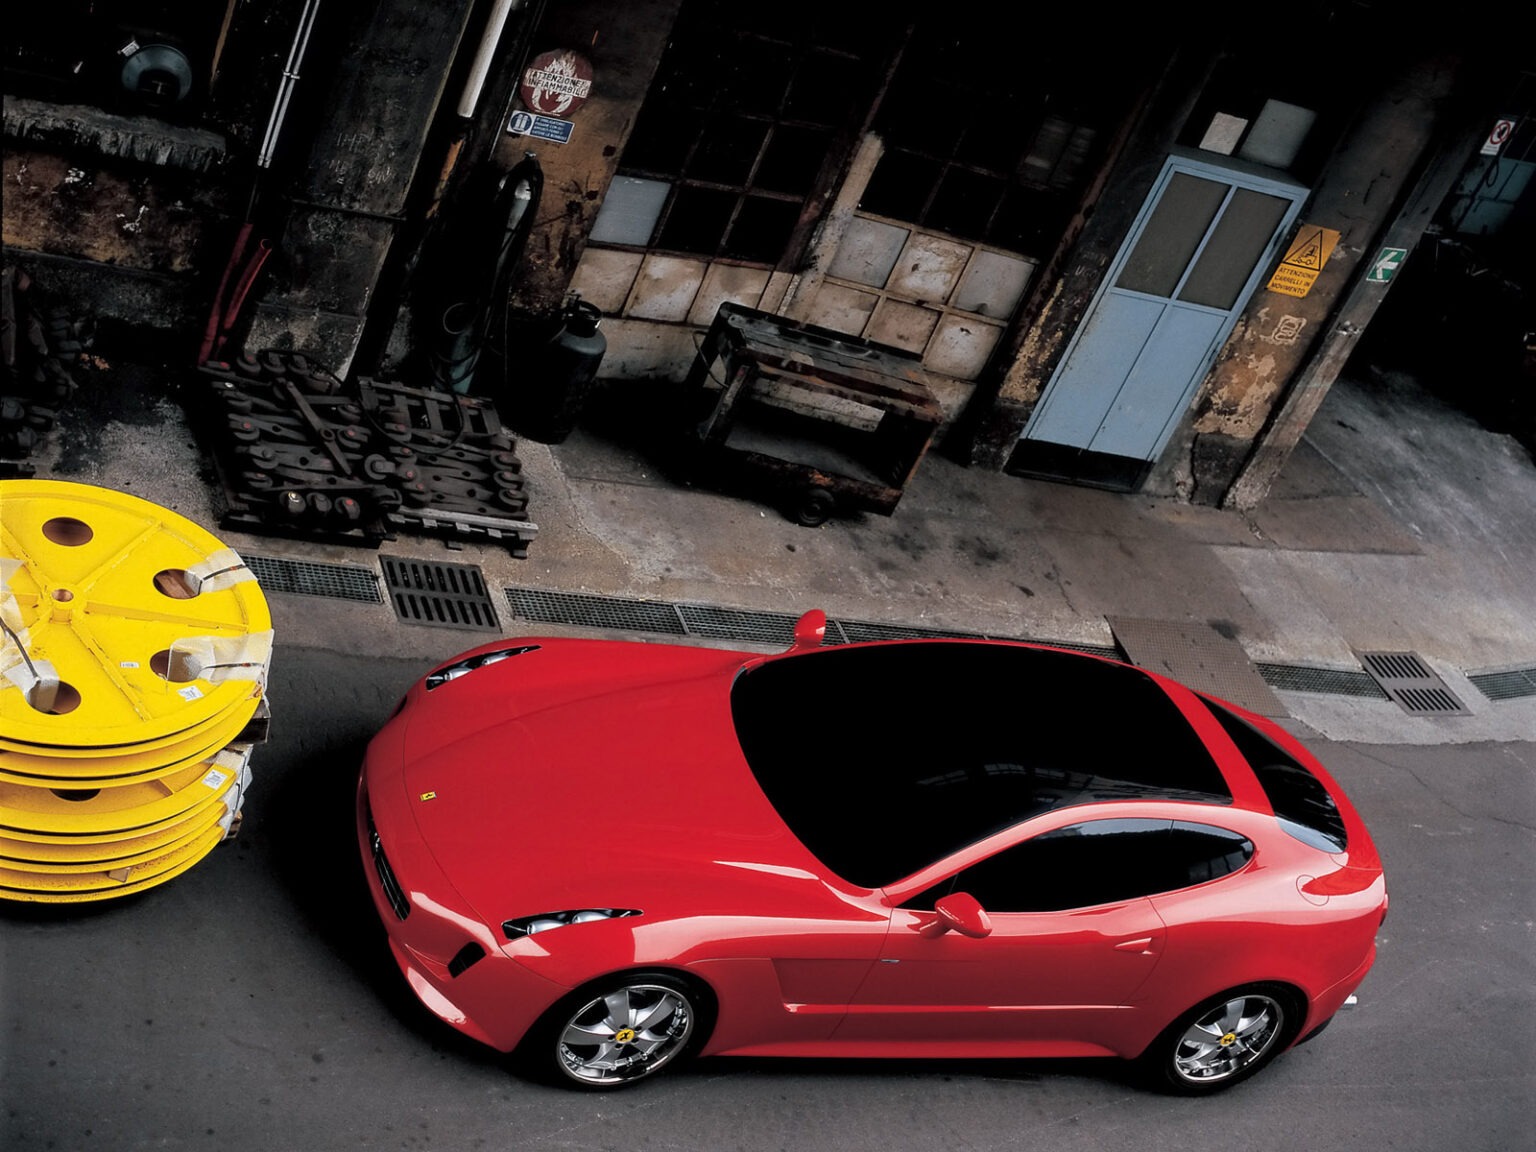 A closer look at the Ferrari GG50 by Italdesign Giugiaro